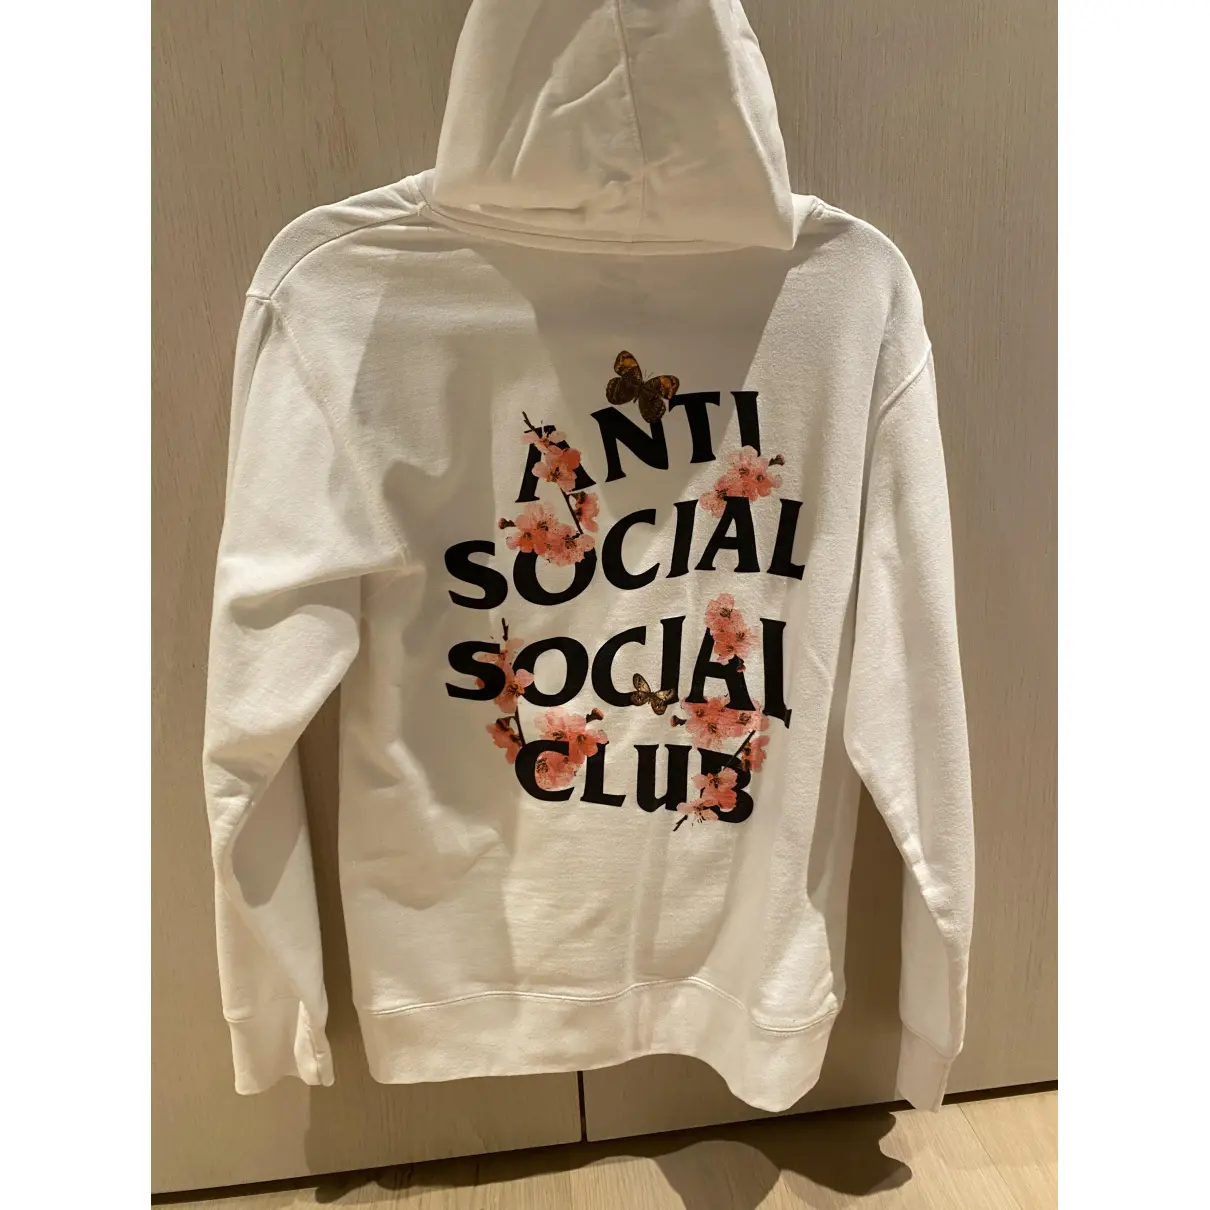 Buy Anti Social Social Club Jumper online